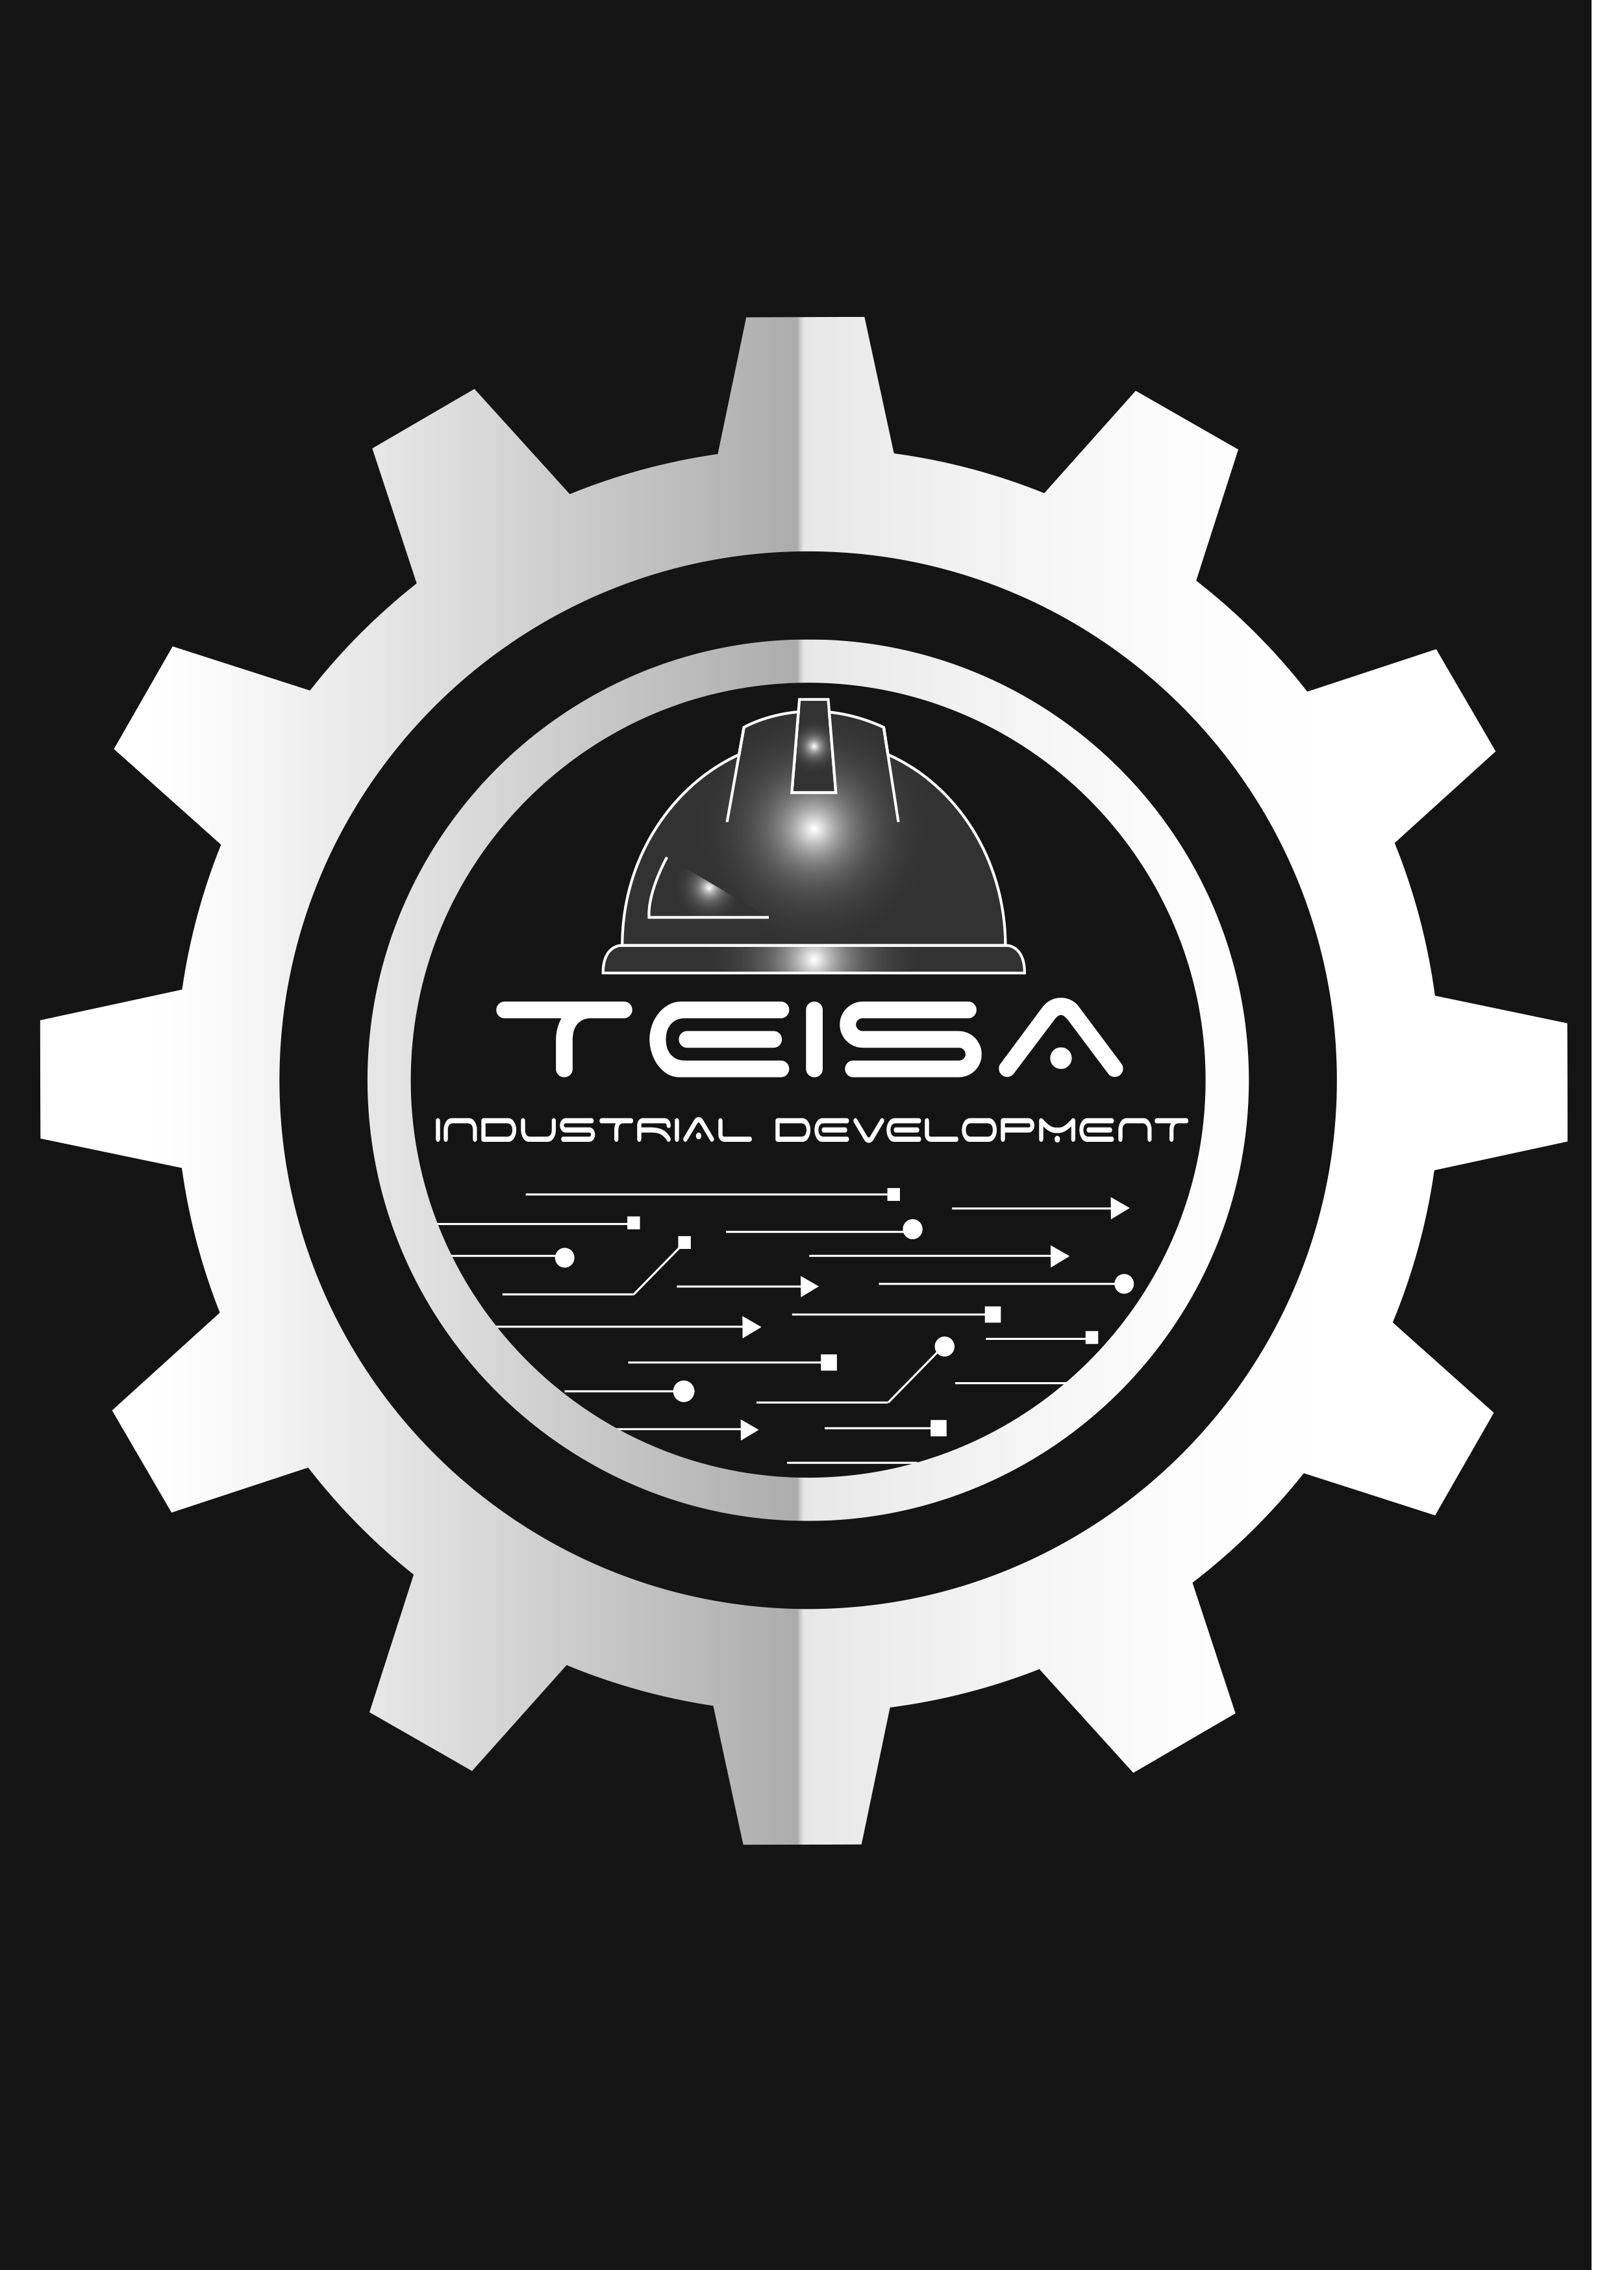 Teisa Industrial Development